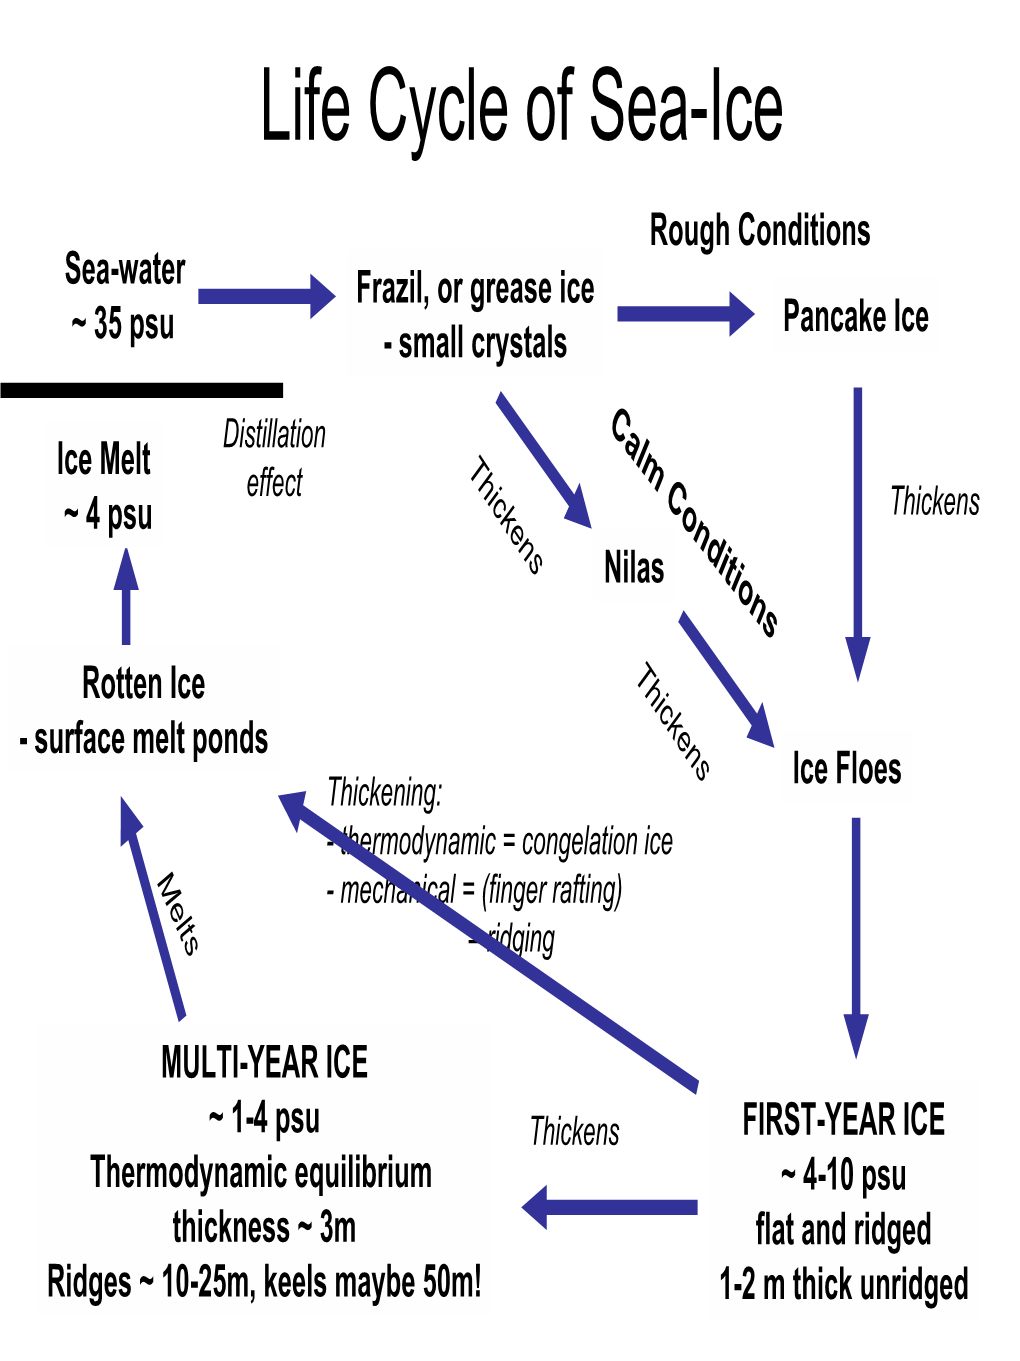 Life Cycle of Sea-Ice